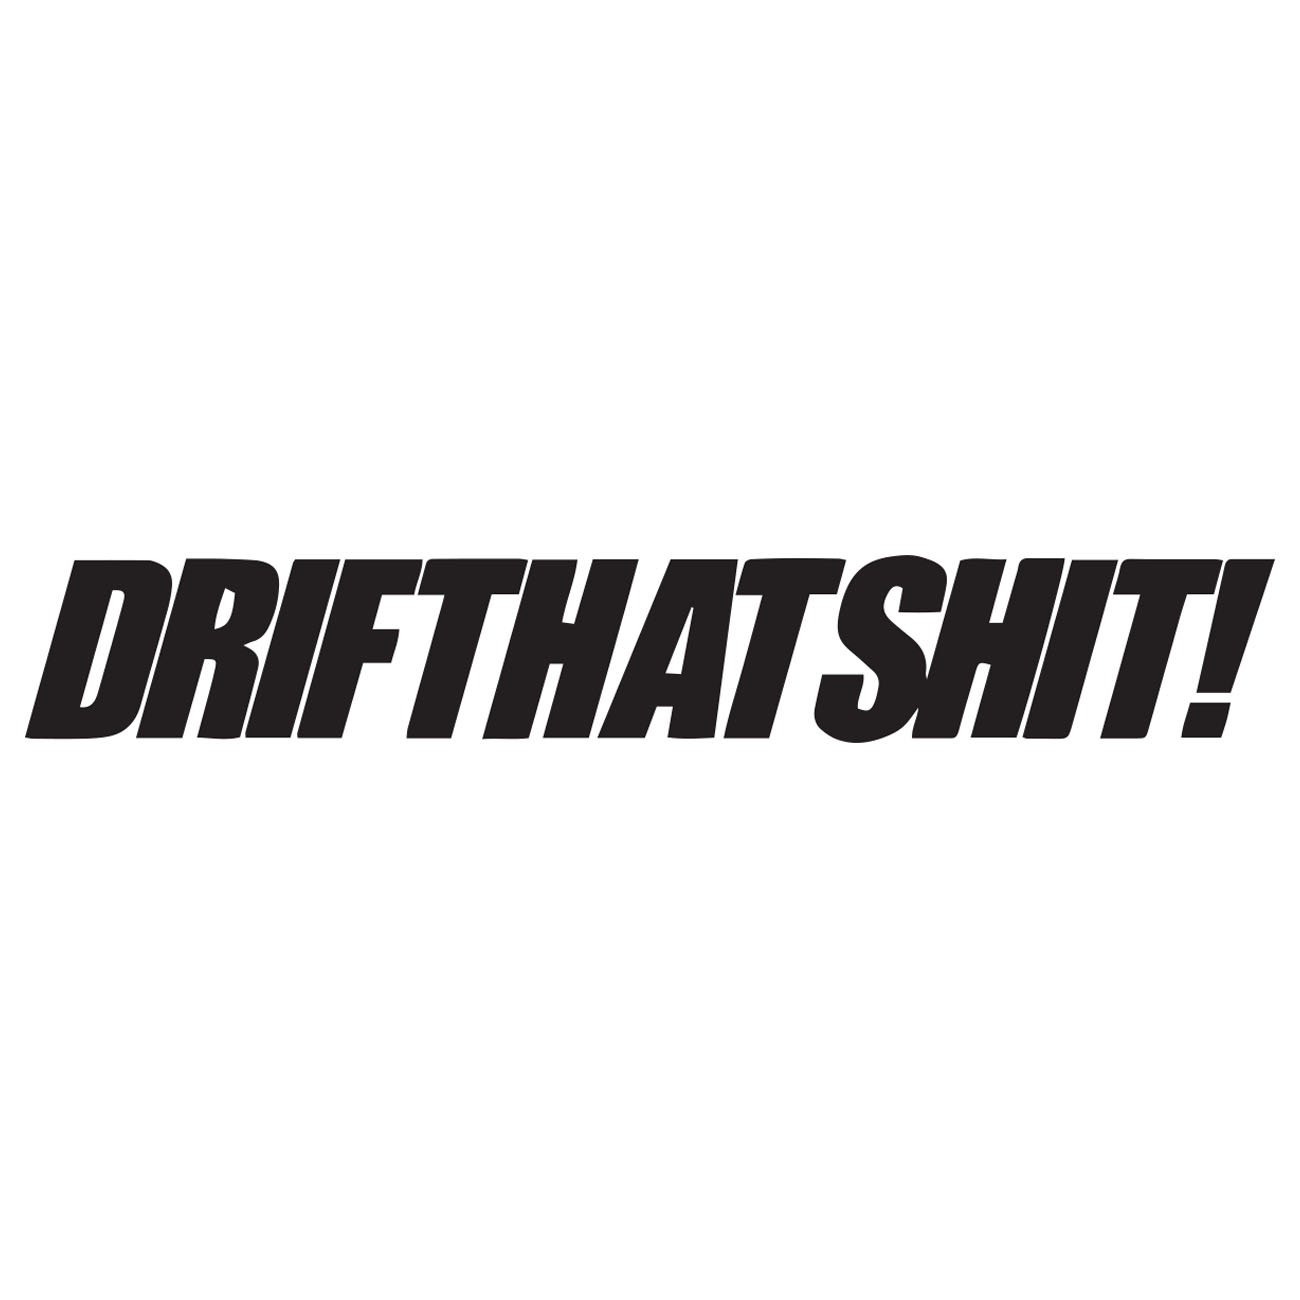 DriftThatShit!